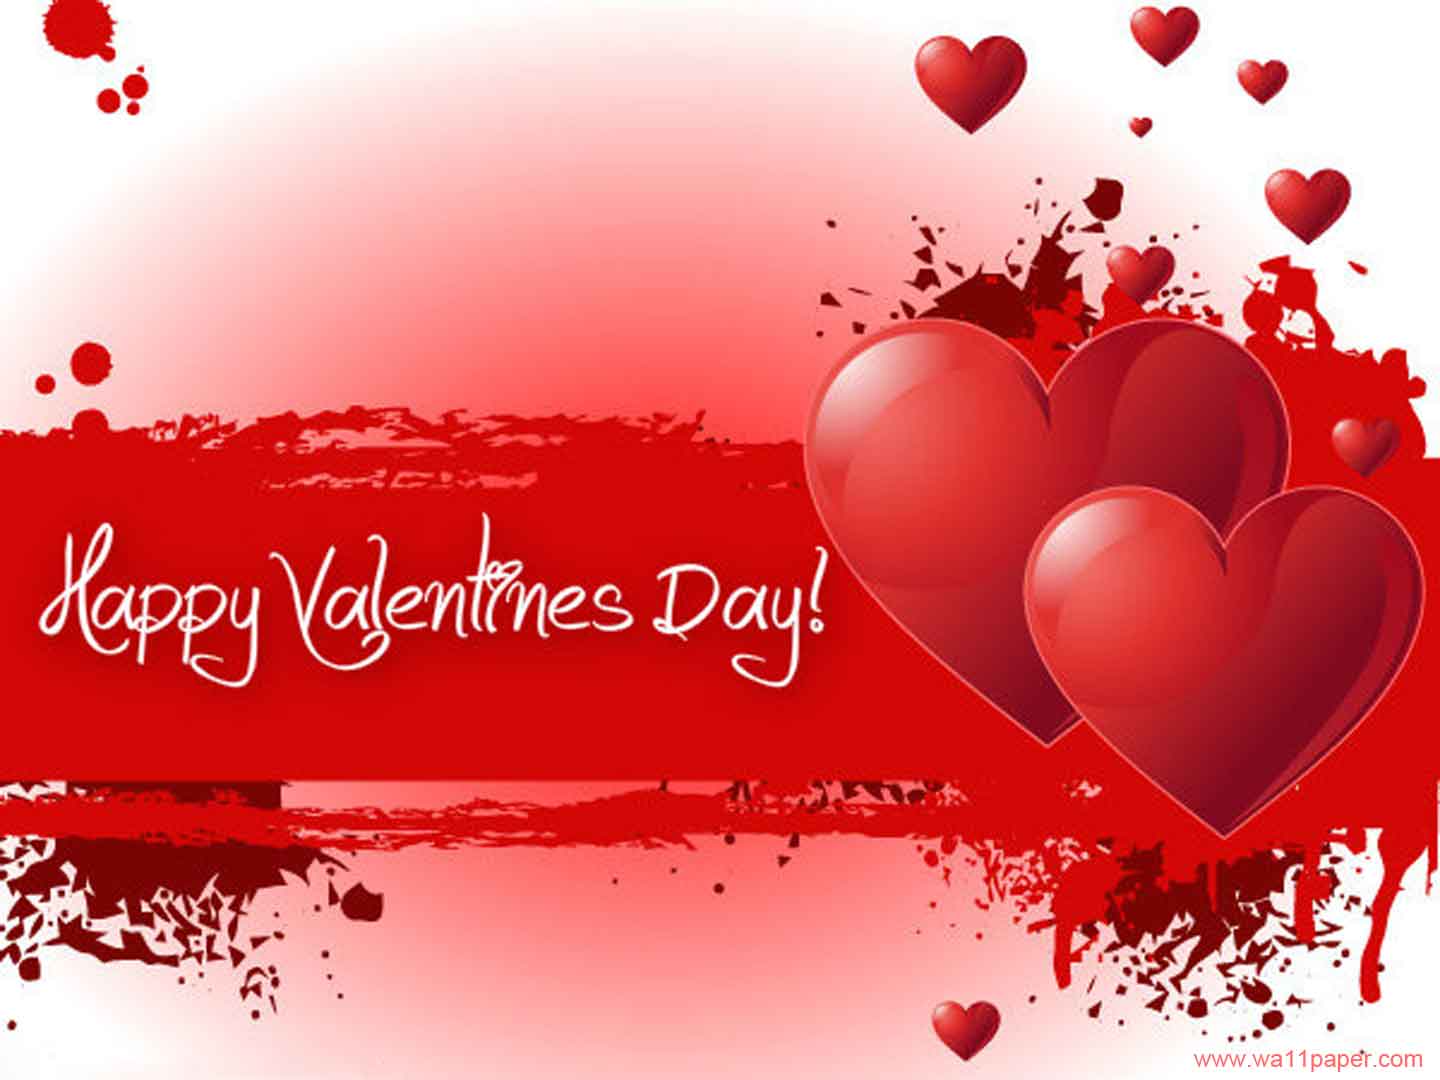 Kumpulan Kata Kata Ucapan Hari Valentine Day 2017 Paling Romantis